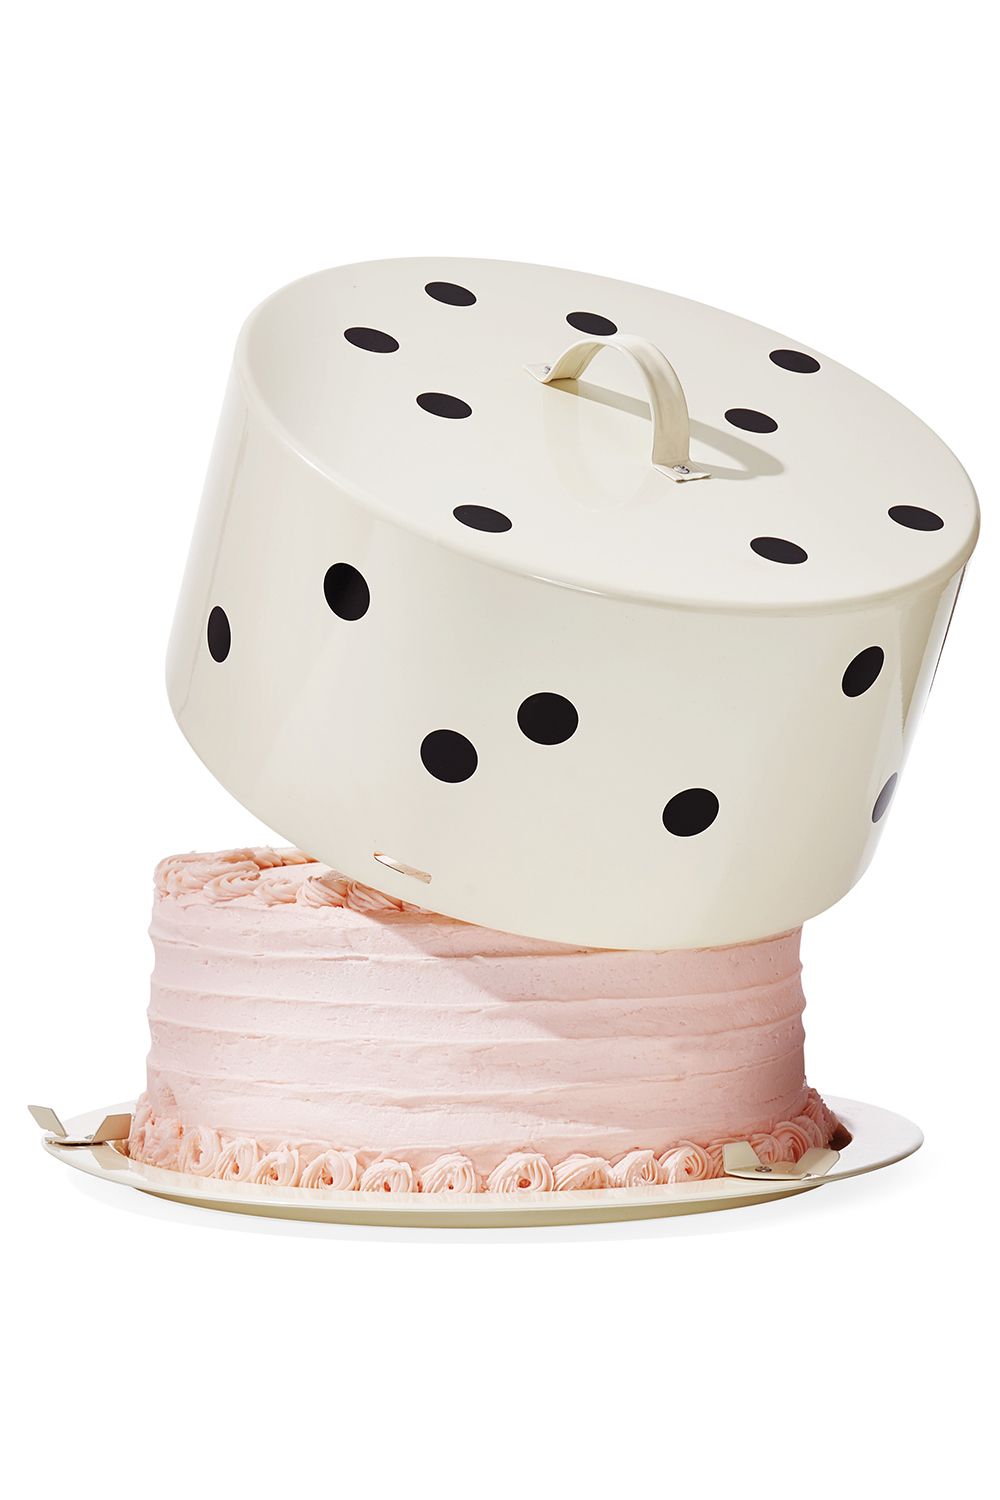 Symple Stuff Aleda 3 Tier Cupcake Holder and Cake Carrier & Reviews |  Wayfair.co.uk